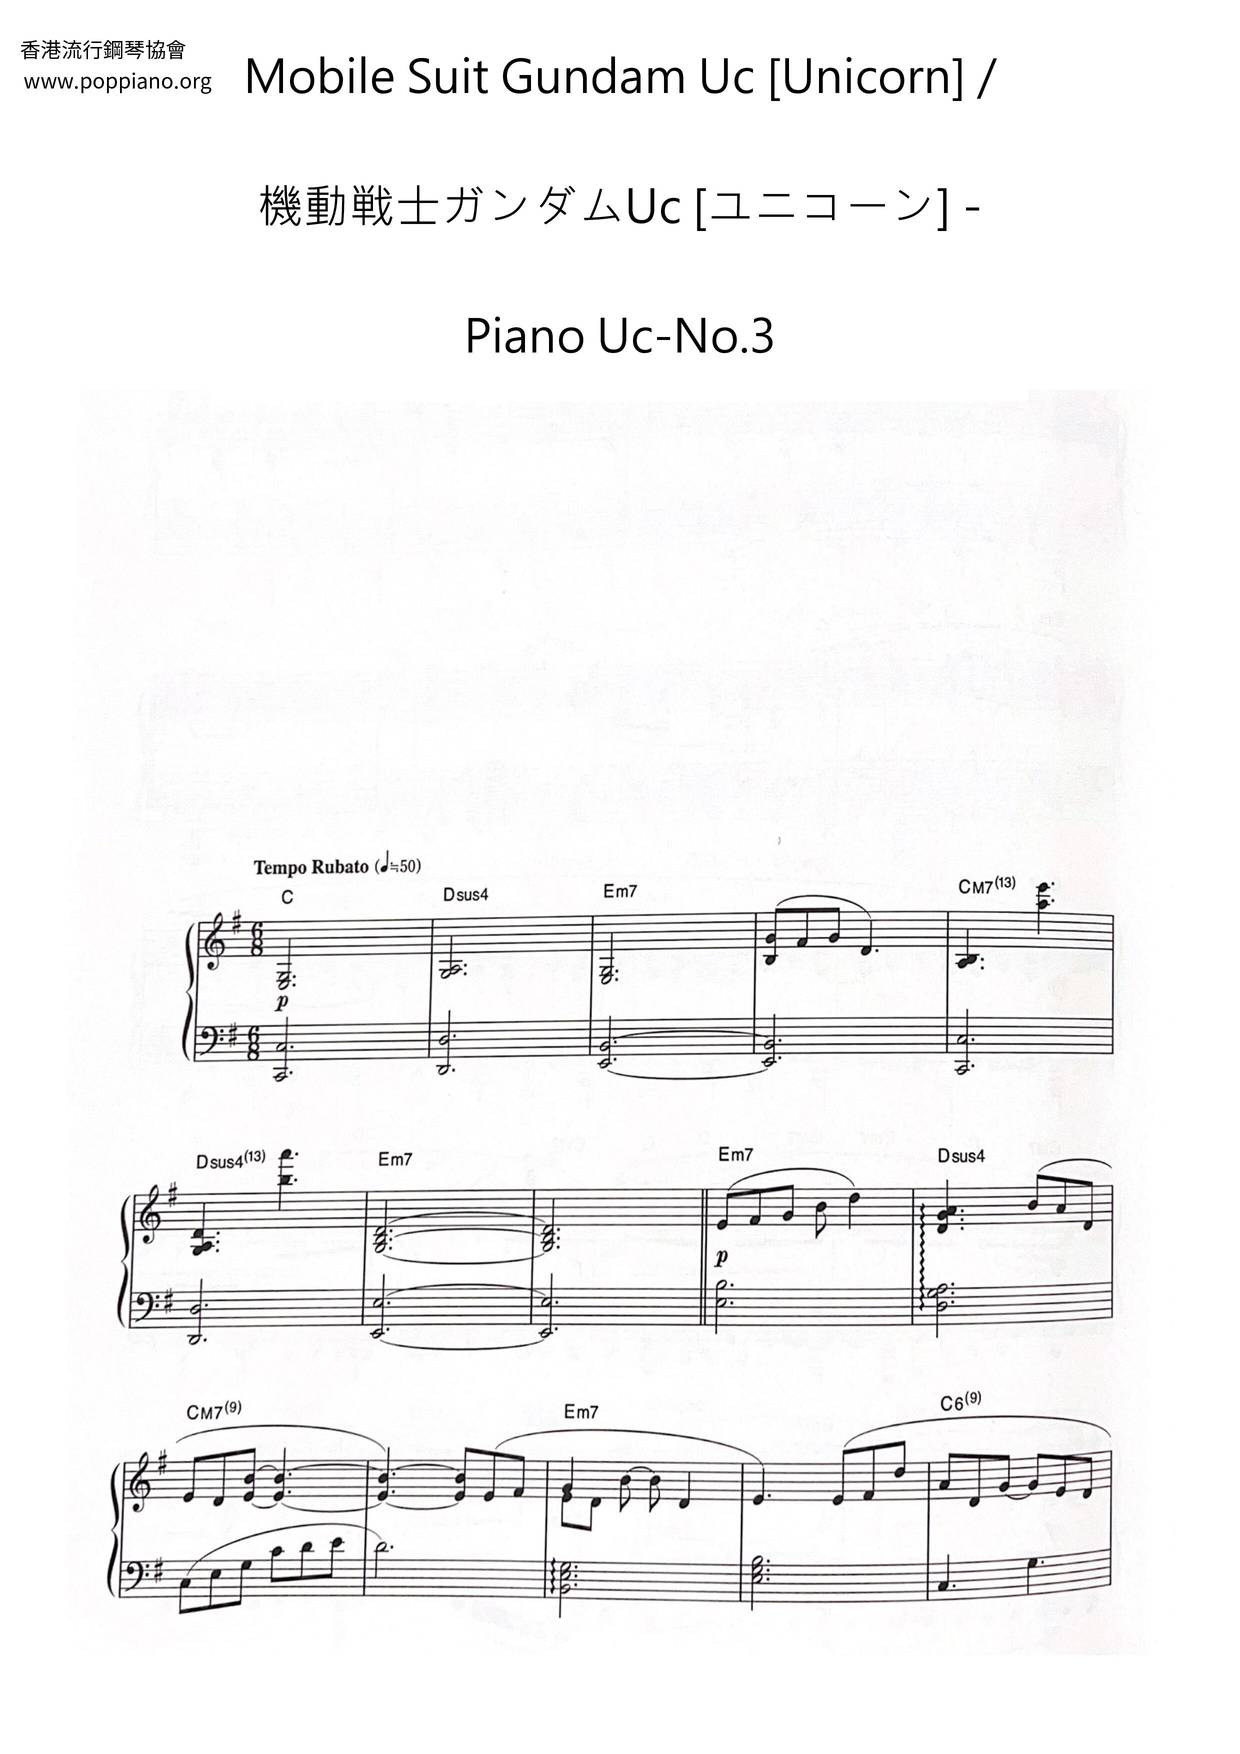 Piano Uc-No.3 Score